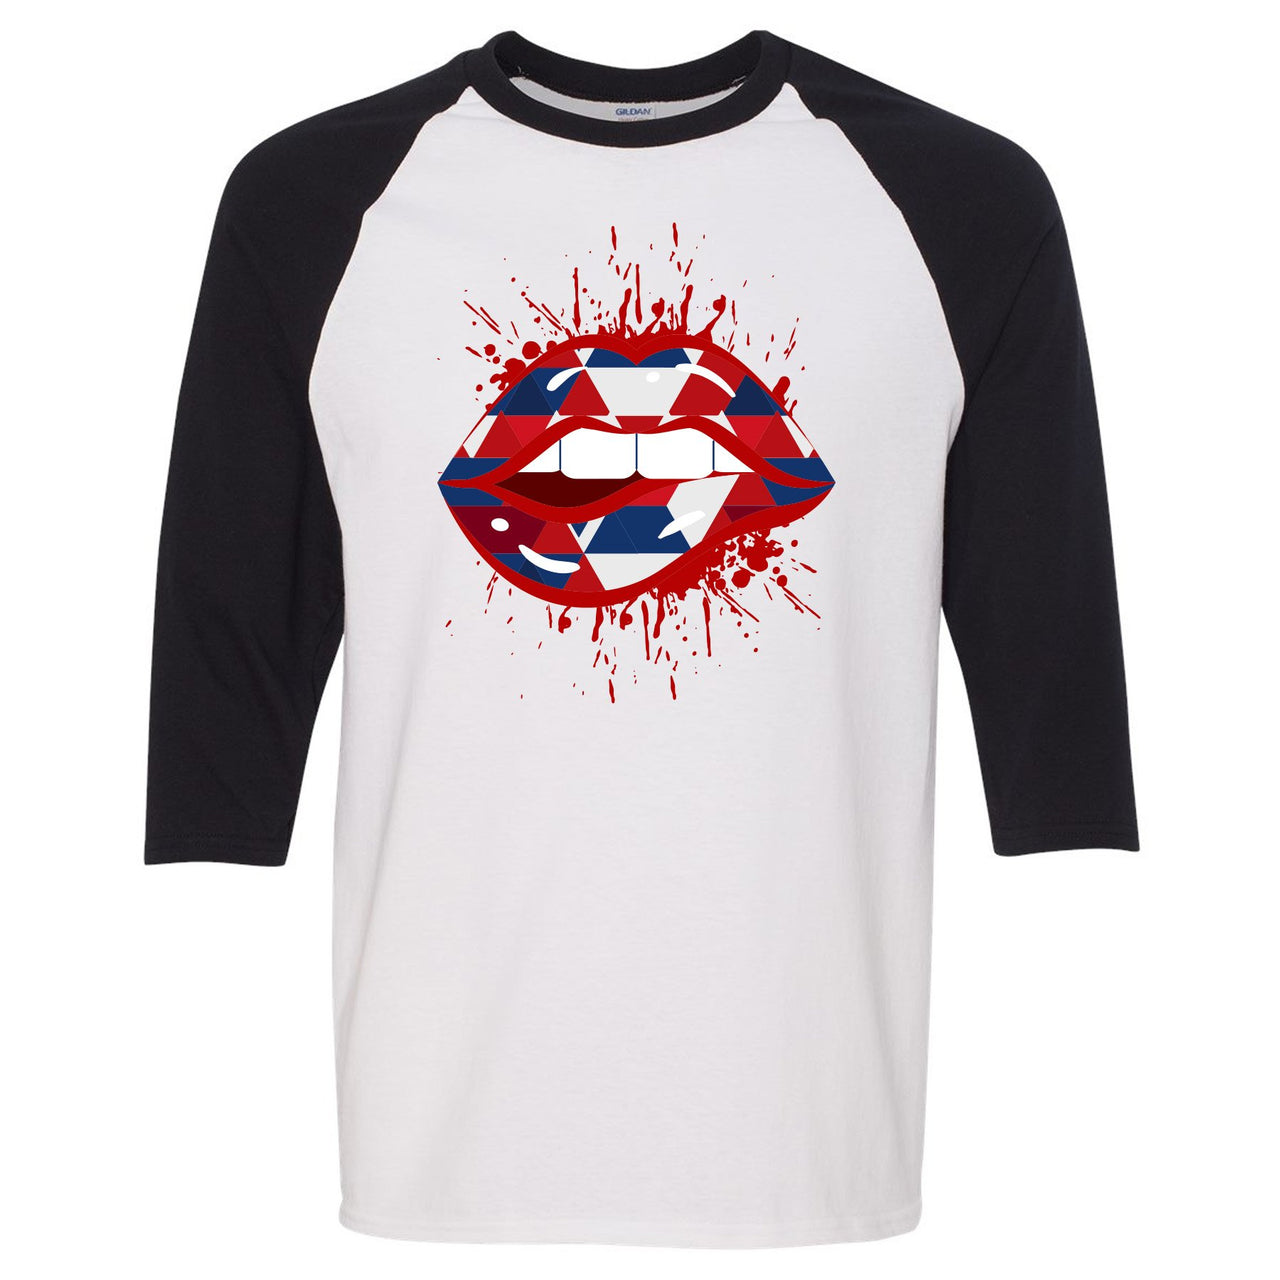 USA One Foams Raglan T Shirt | Geometric Lips Splatter, White and Black